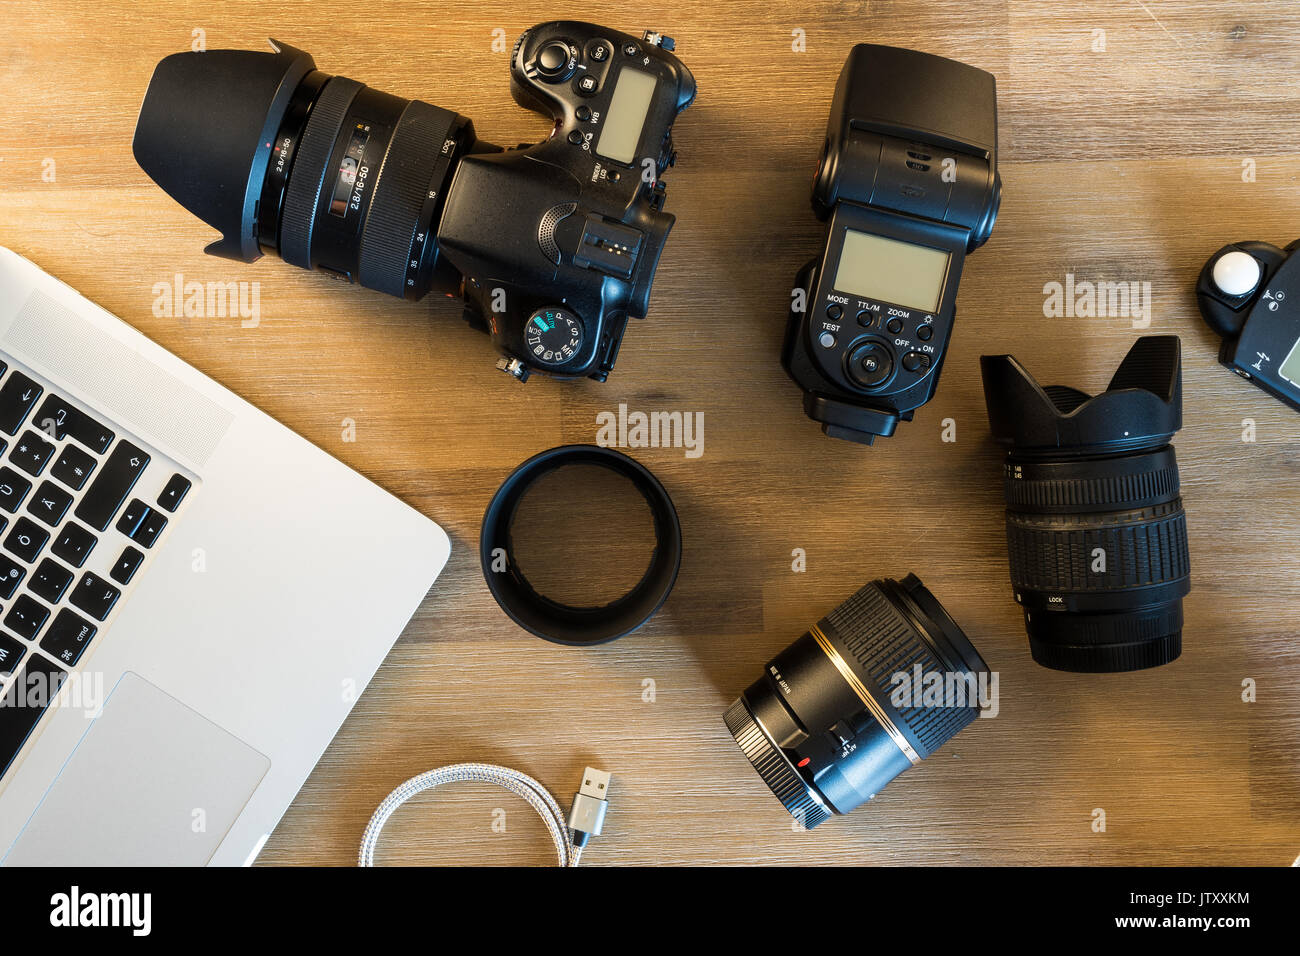 desktop with photography equipment, camera, lenses Stock Photo